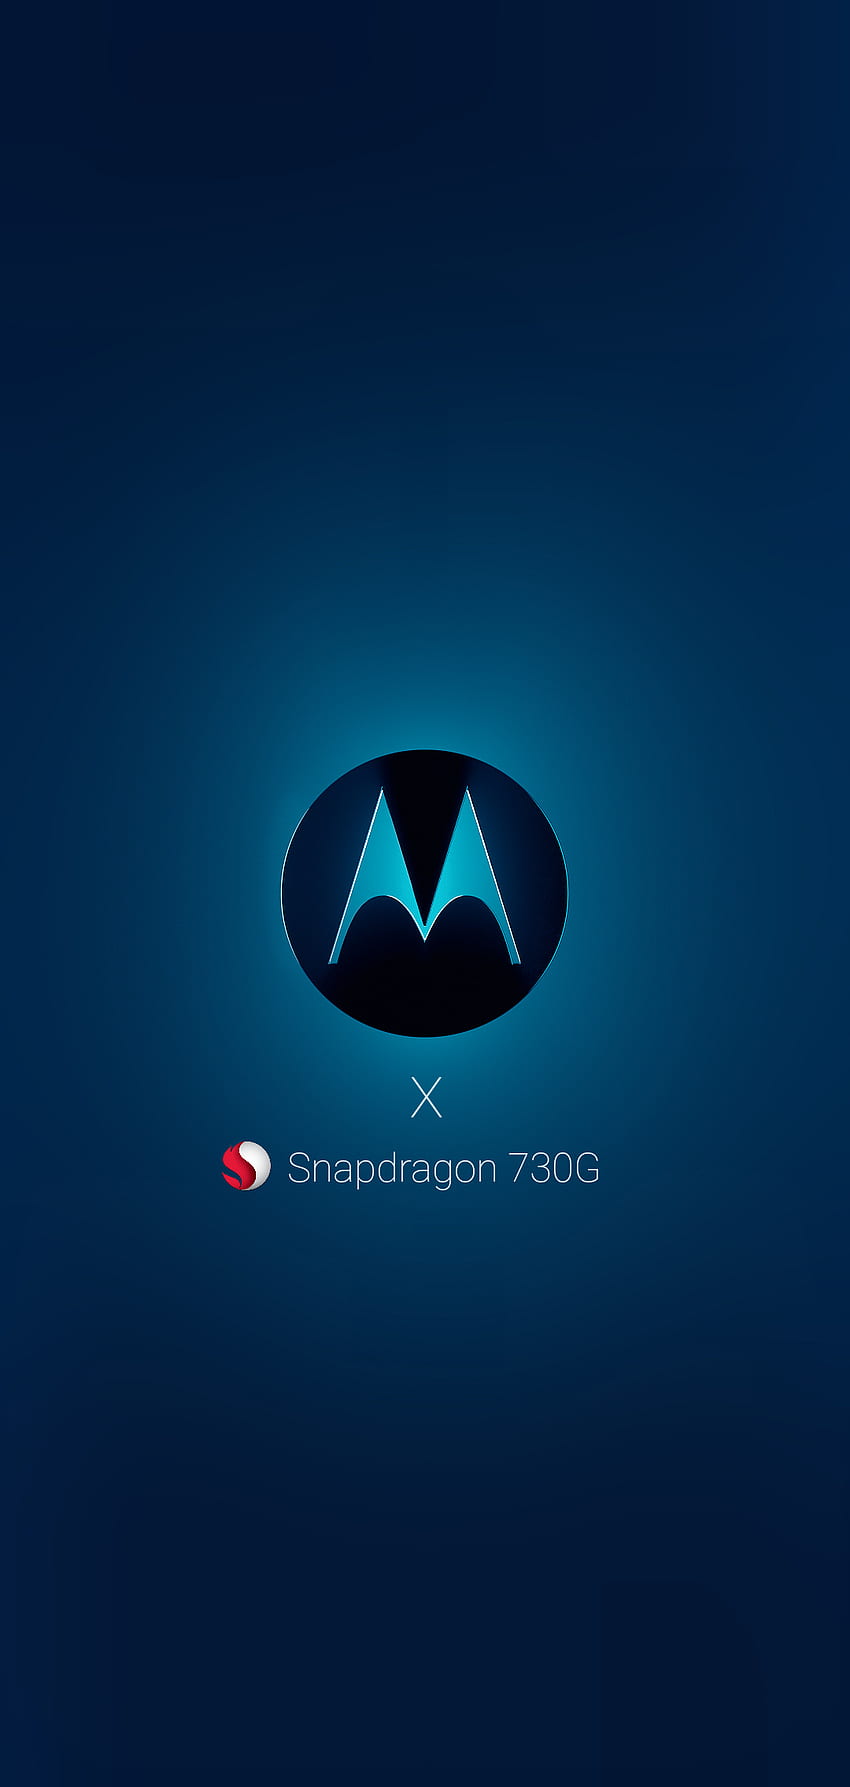 Motorola x Snapdragon, 730g HD phone wallpaper